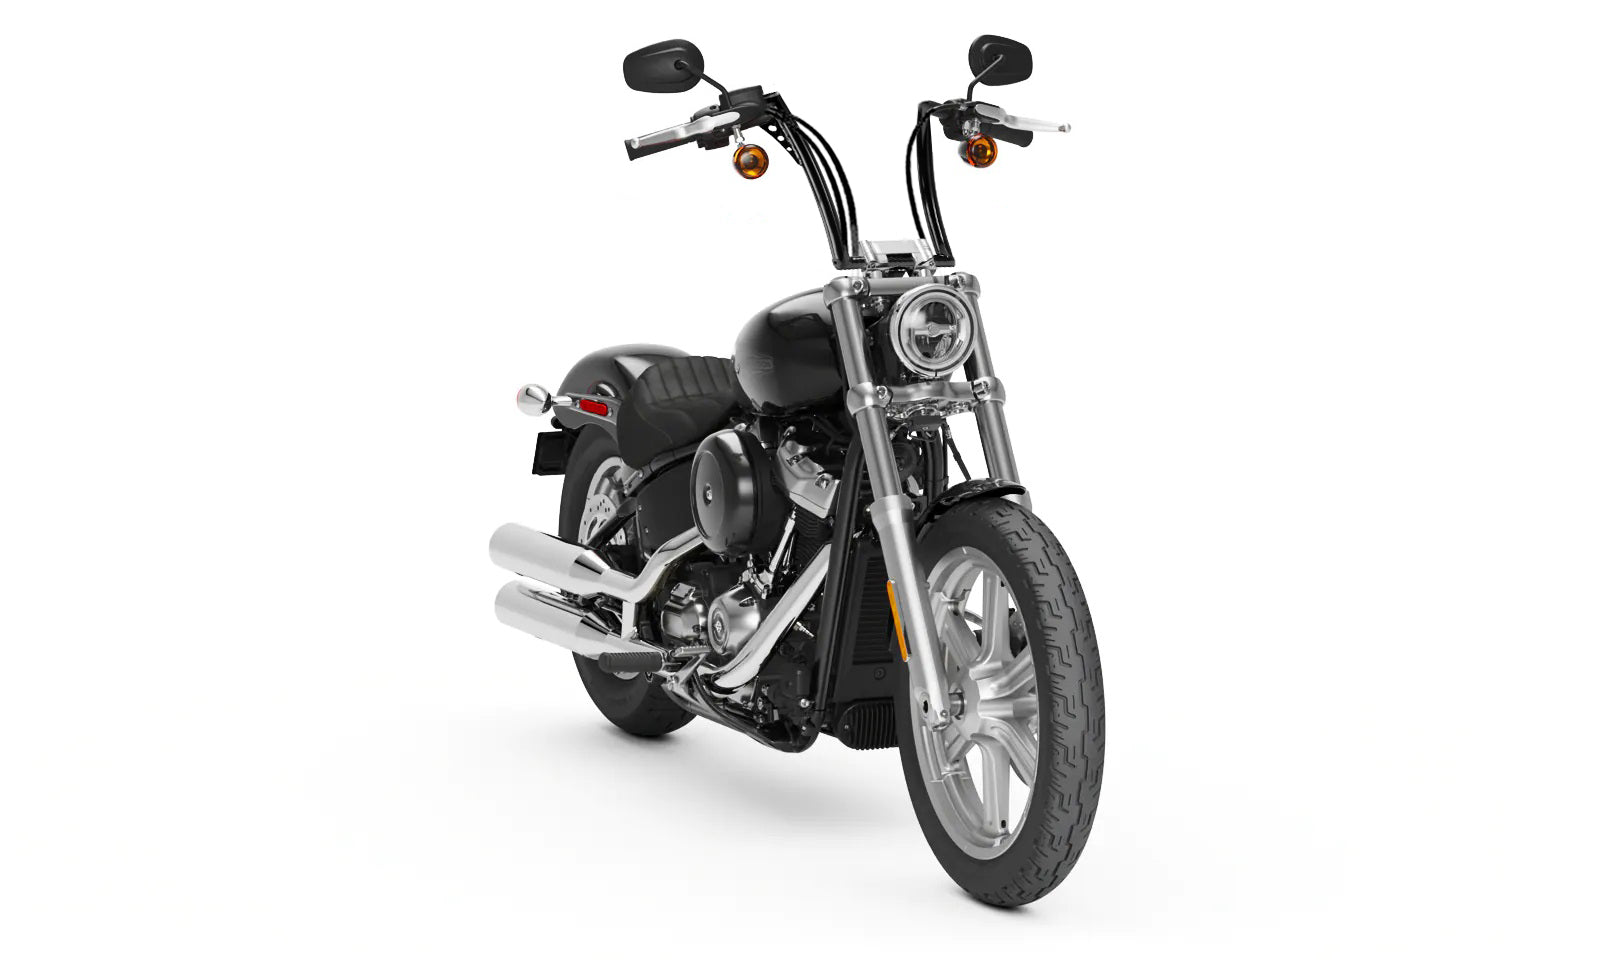 Viking Iron Born 12" Handlebar For Harley Softail Standard FXST Gloss Black Bag on Bike View @expand